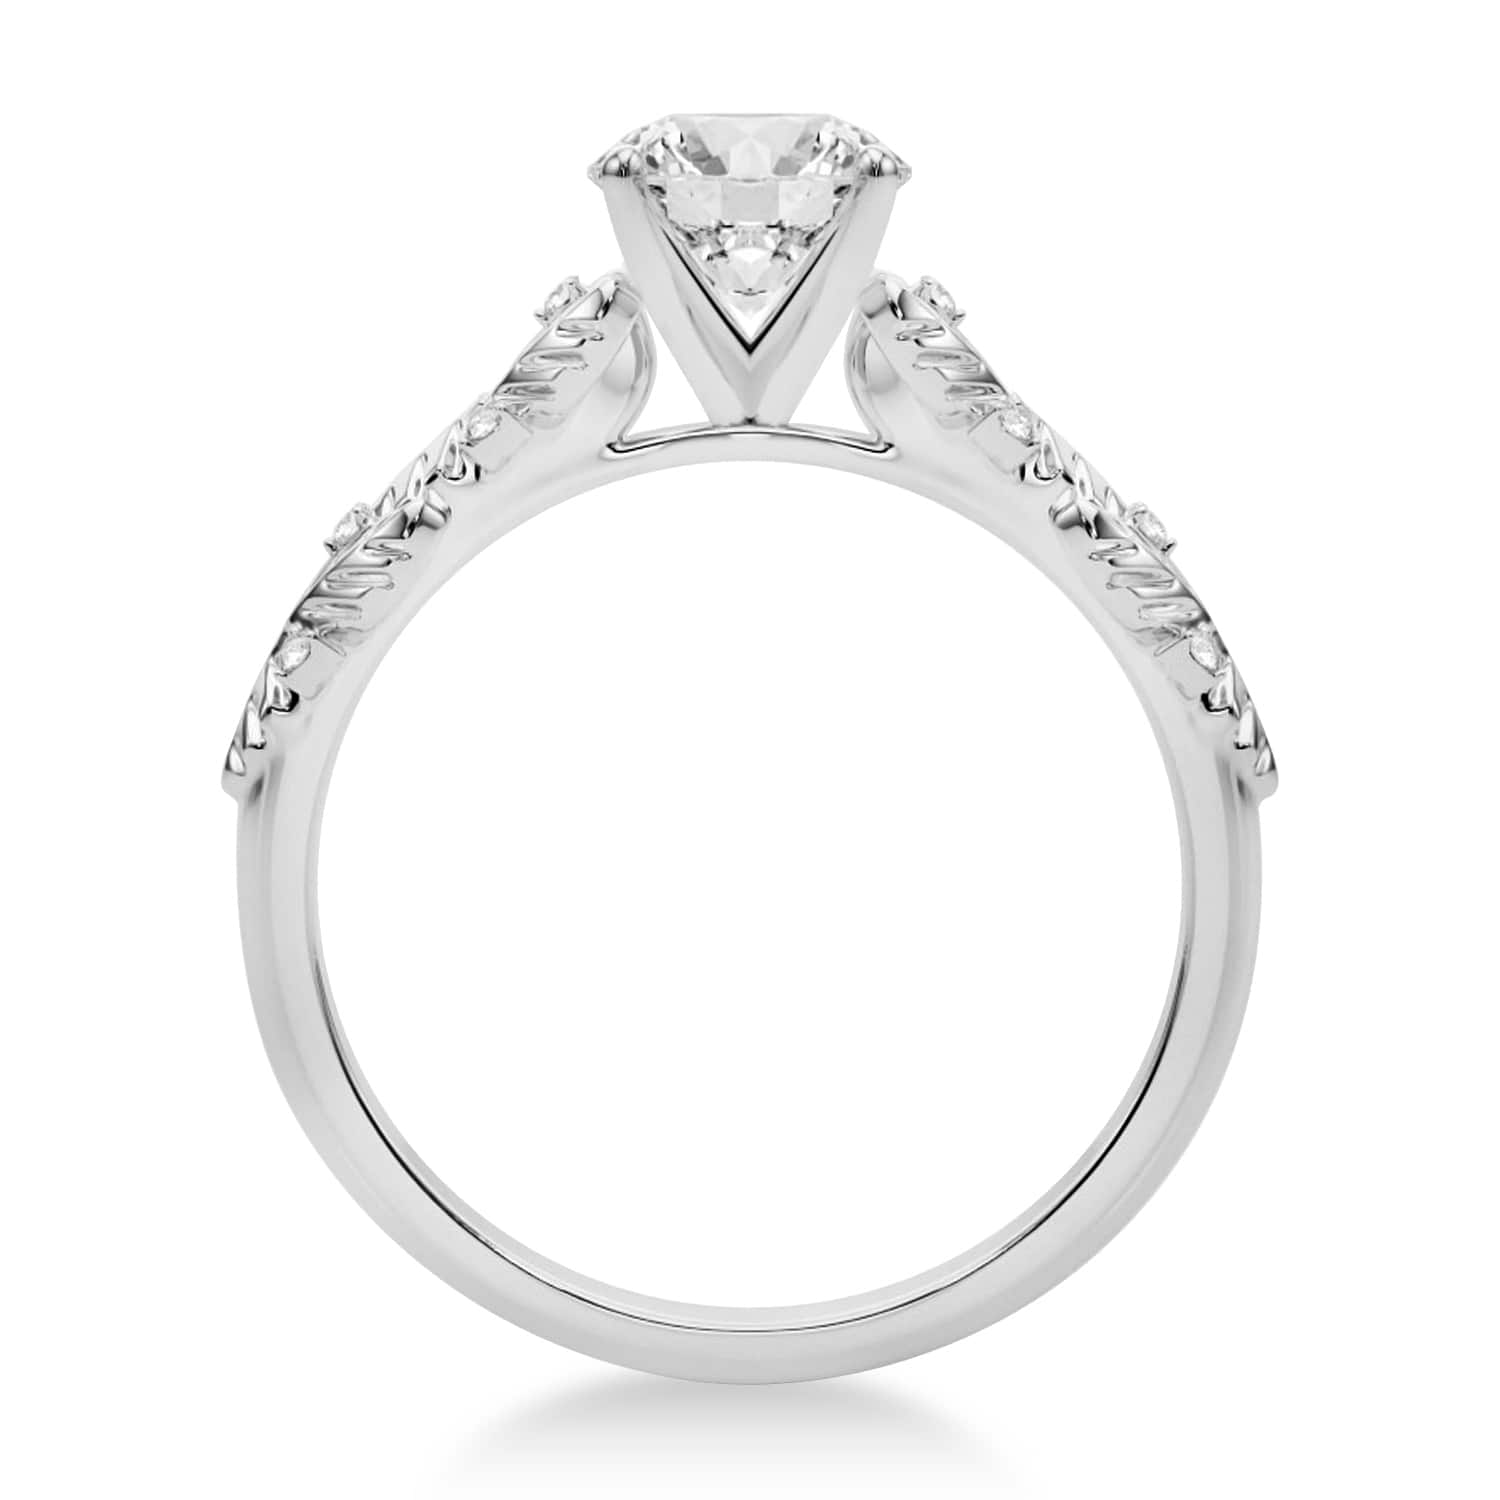 Lab Grown Diamond Floral Vine Engagement Ring 14k White Gold (0.05ct)